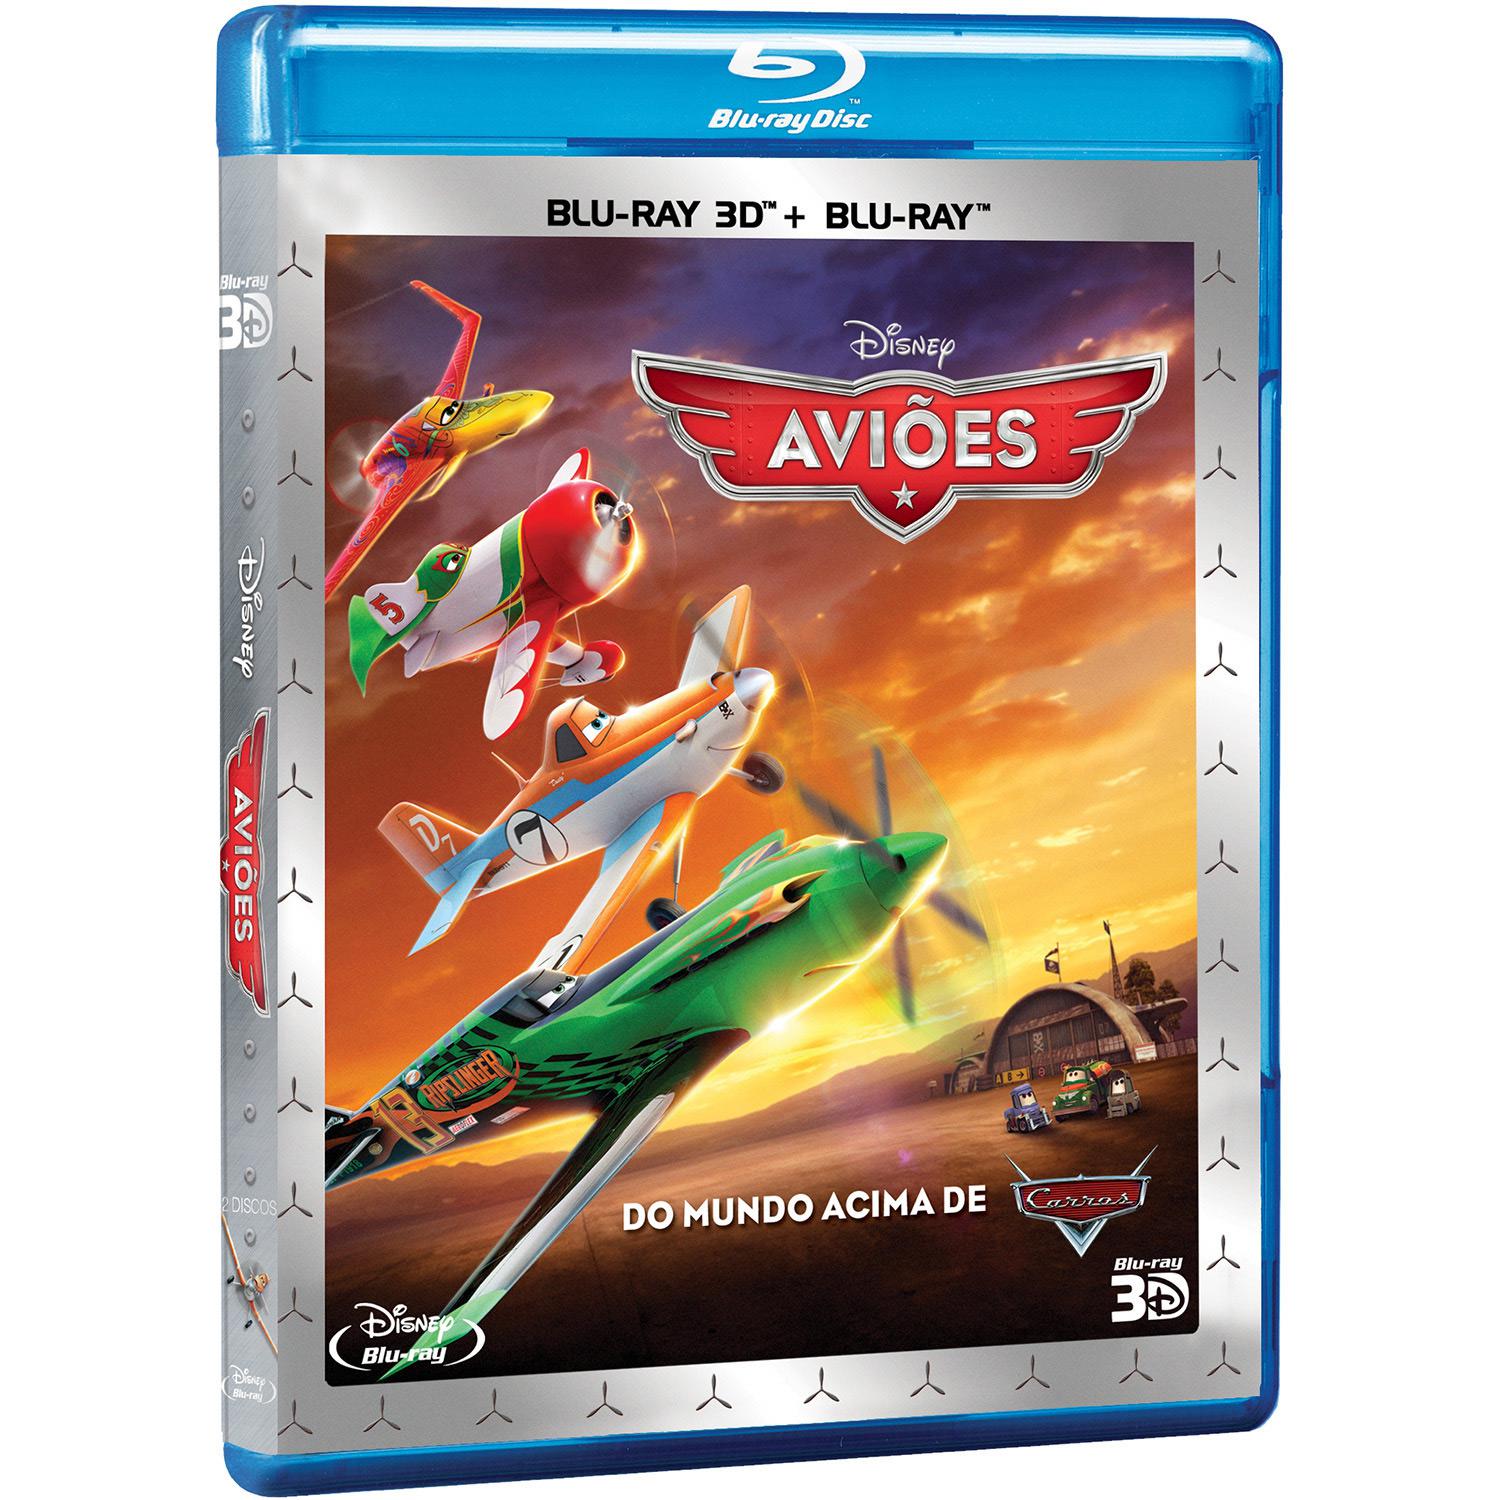 Blu-ray 3D Aviões (Blu-ray 3D + Blu-ray) é bom? Vale a pena?